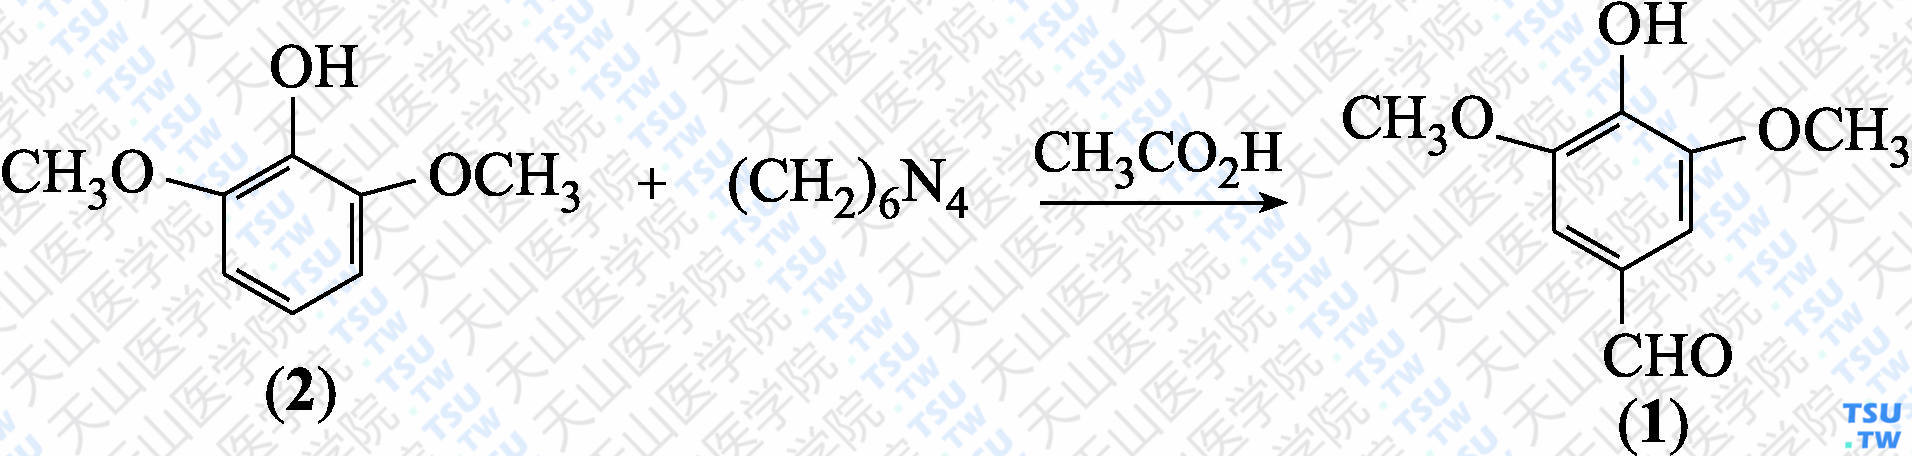 3，5-二甲氧基-4-羟基苯甲醛（分子式：C<sub>9</sub>H<sub>10</sub>O<sub>4</sub>）的合成方法路线及其结构式